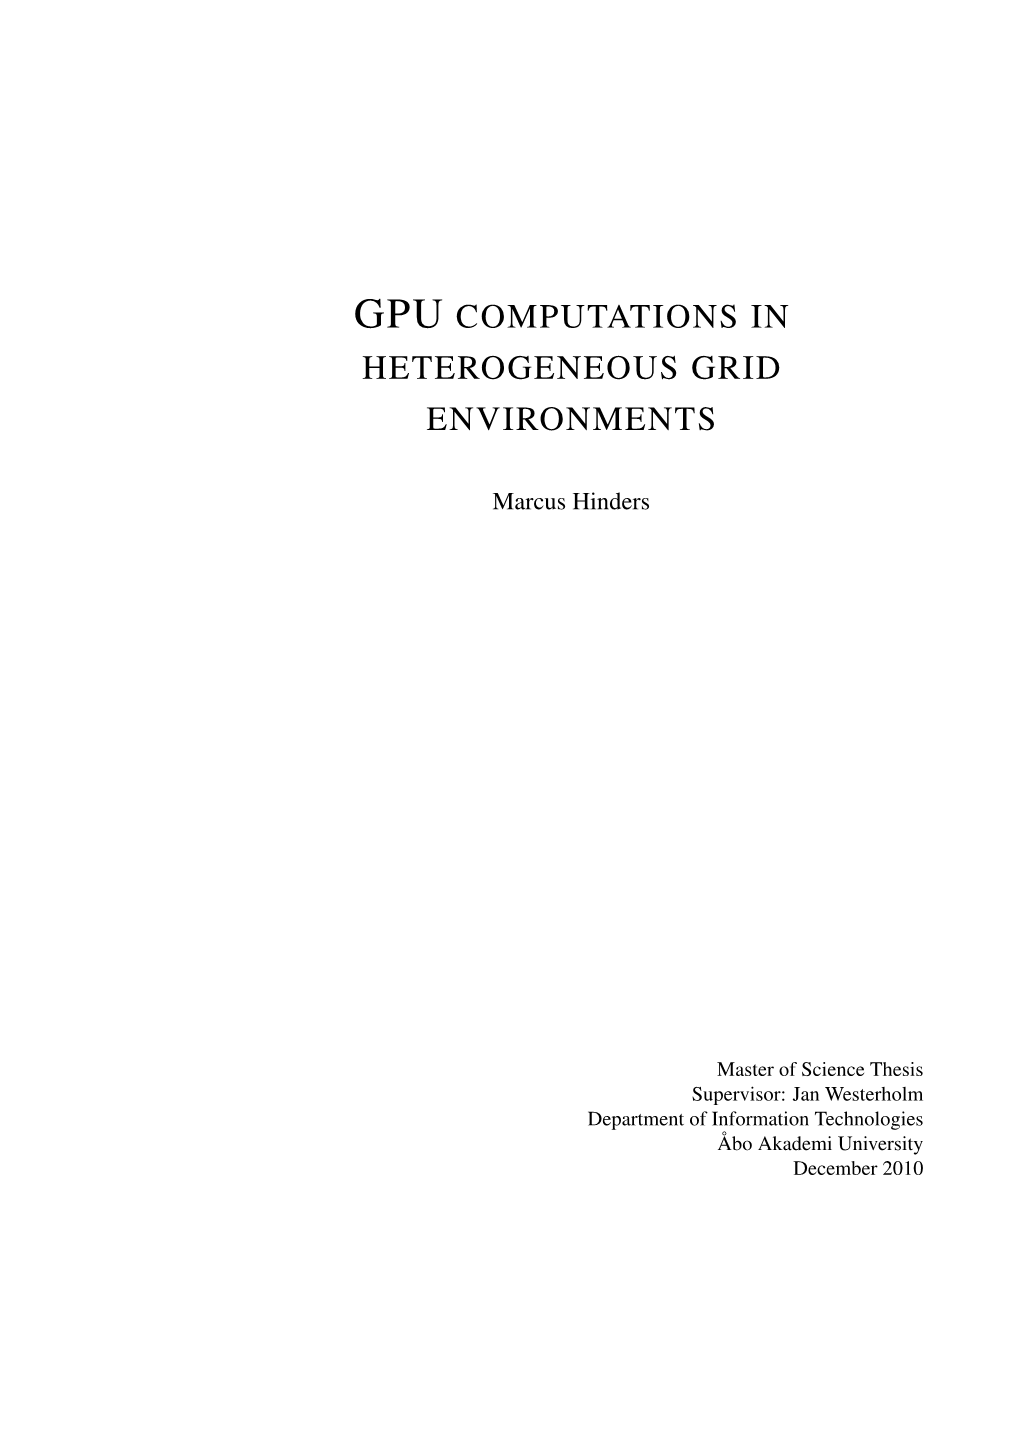 GPU Computations in Heterogeneous Grid Environments